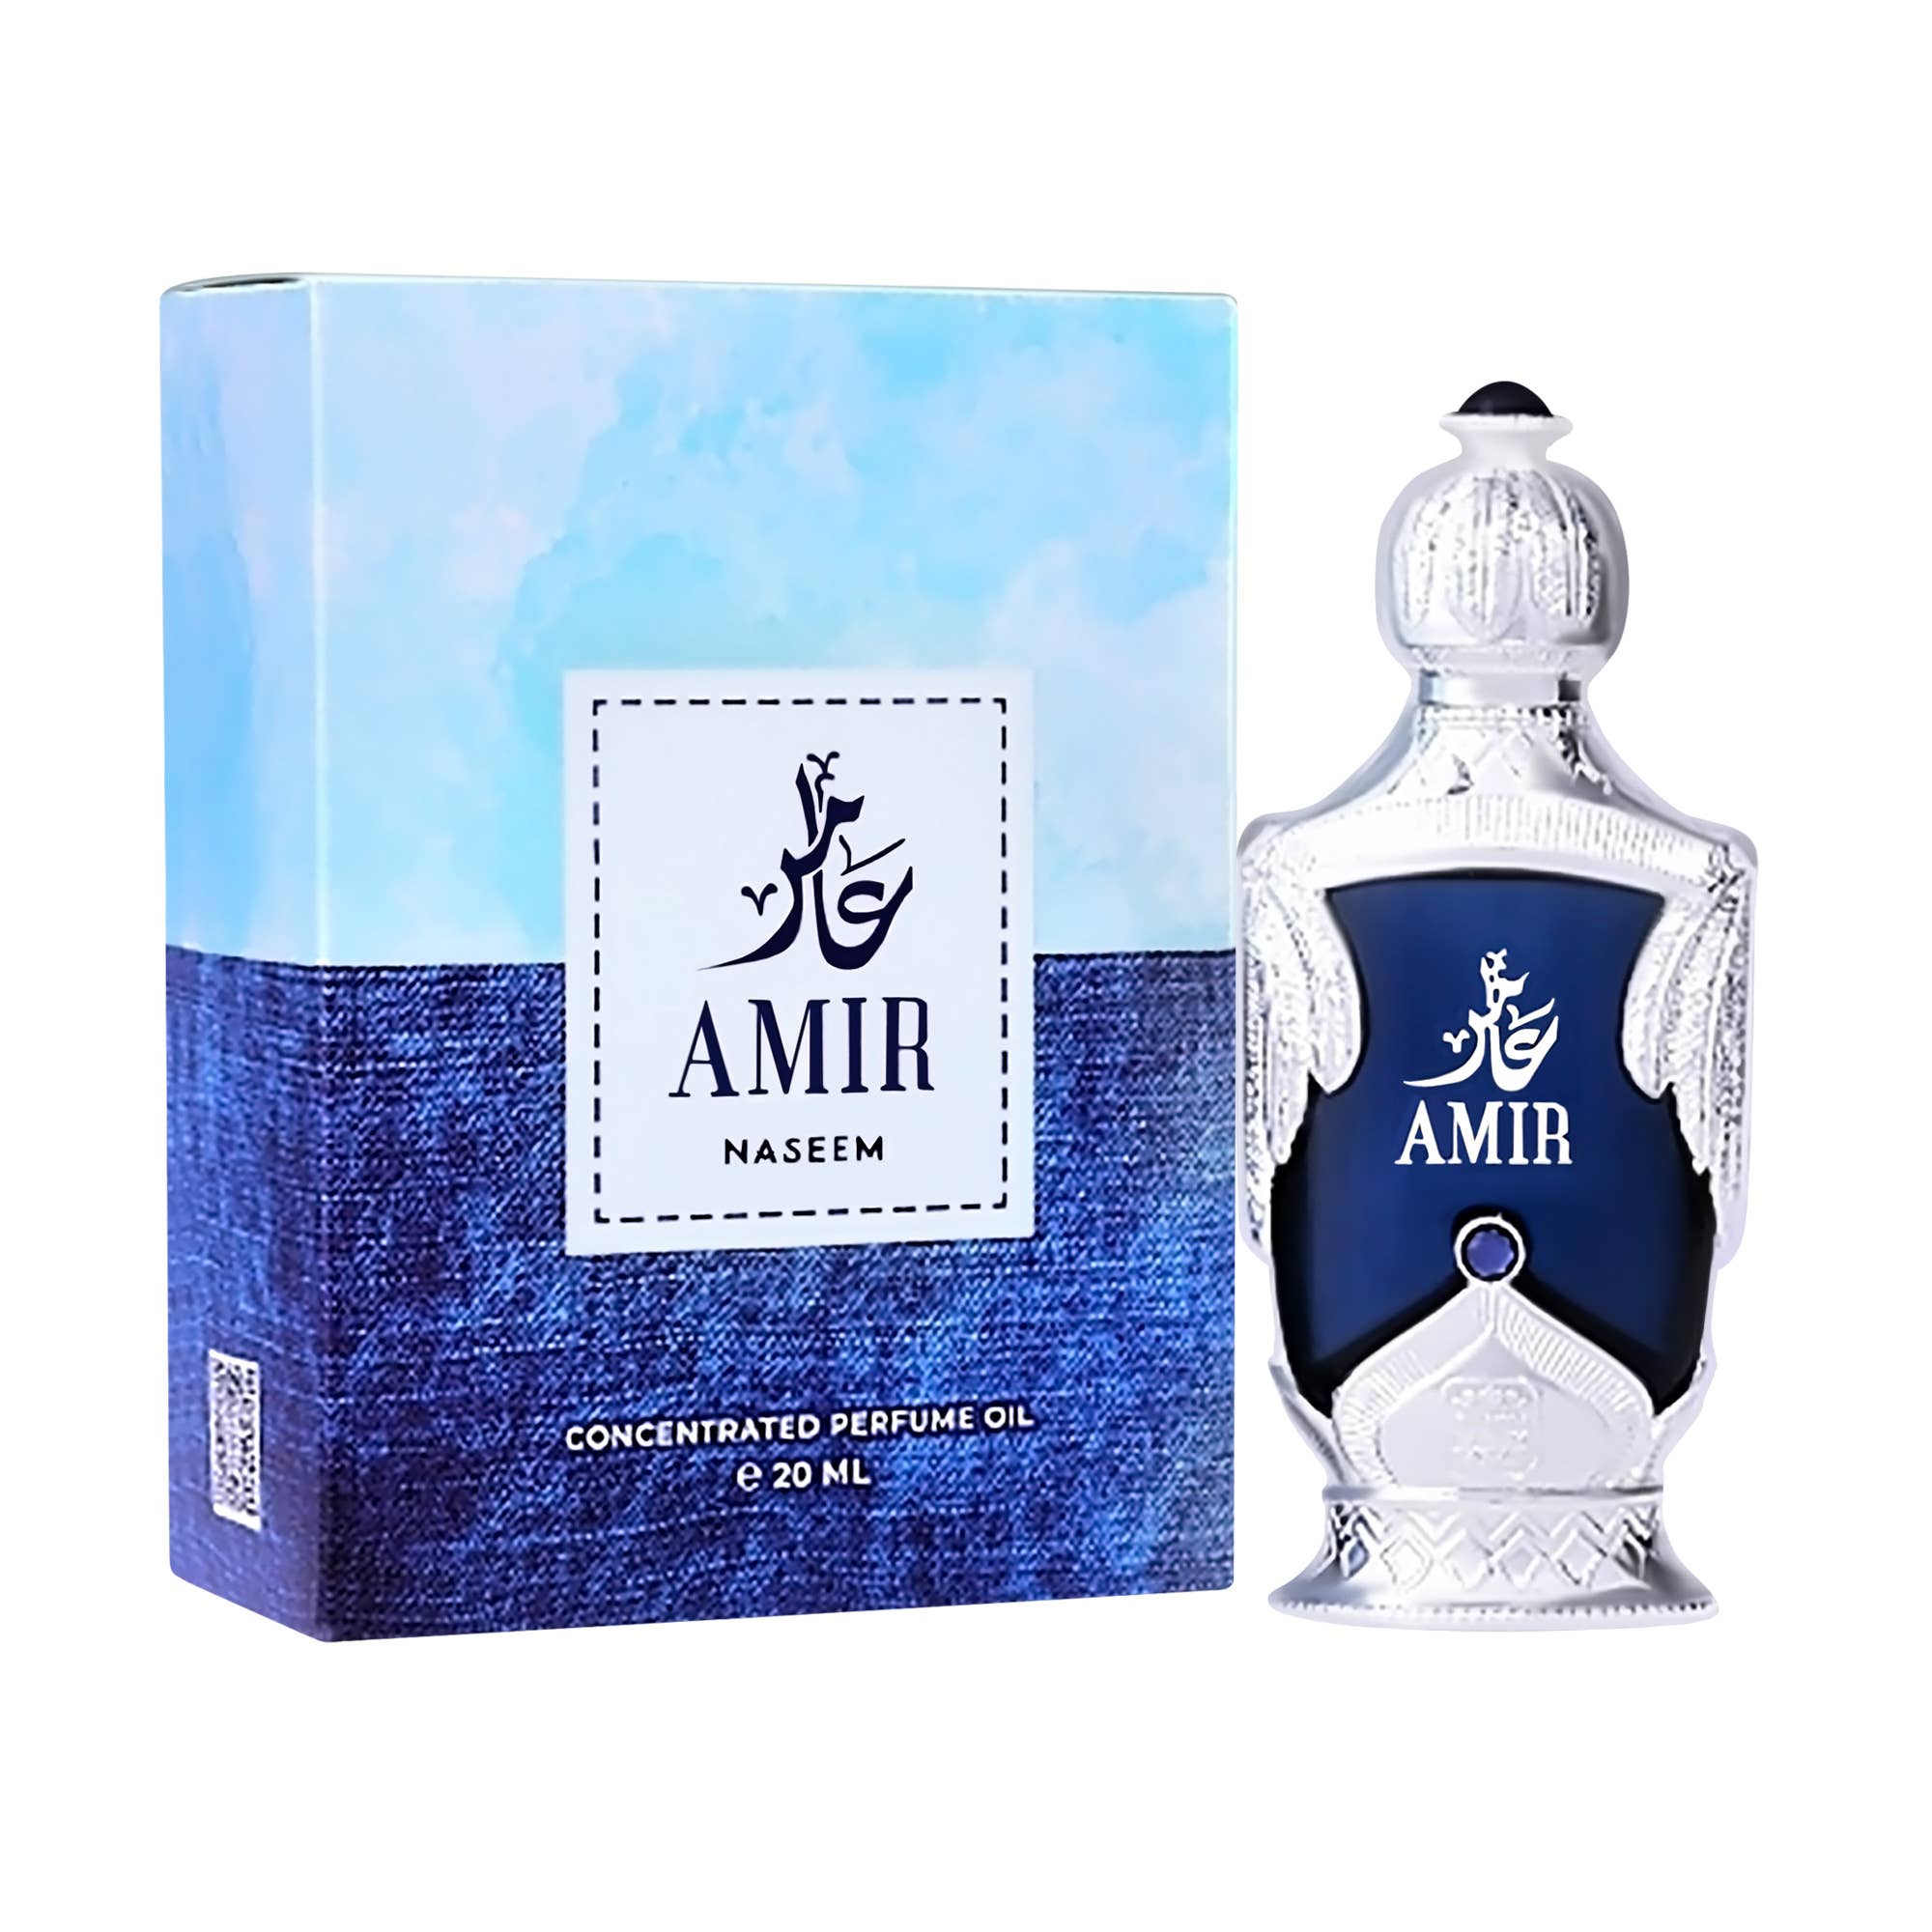 Naseem Jameelah Perfume Oil Rollerball with Composition of Vanilla Musk| Long Lasting Fragrance Oil | Dubai Perfume | Alcohol Free | Arabian